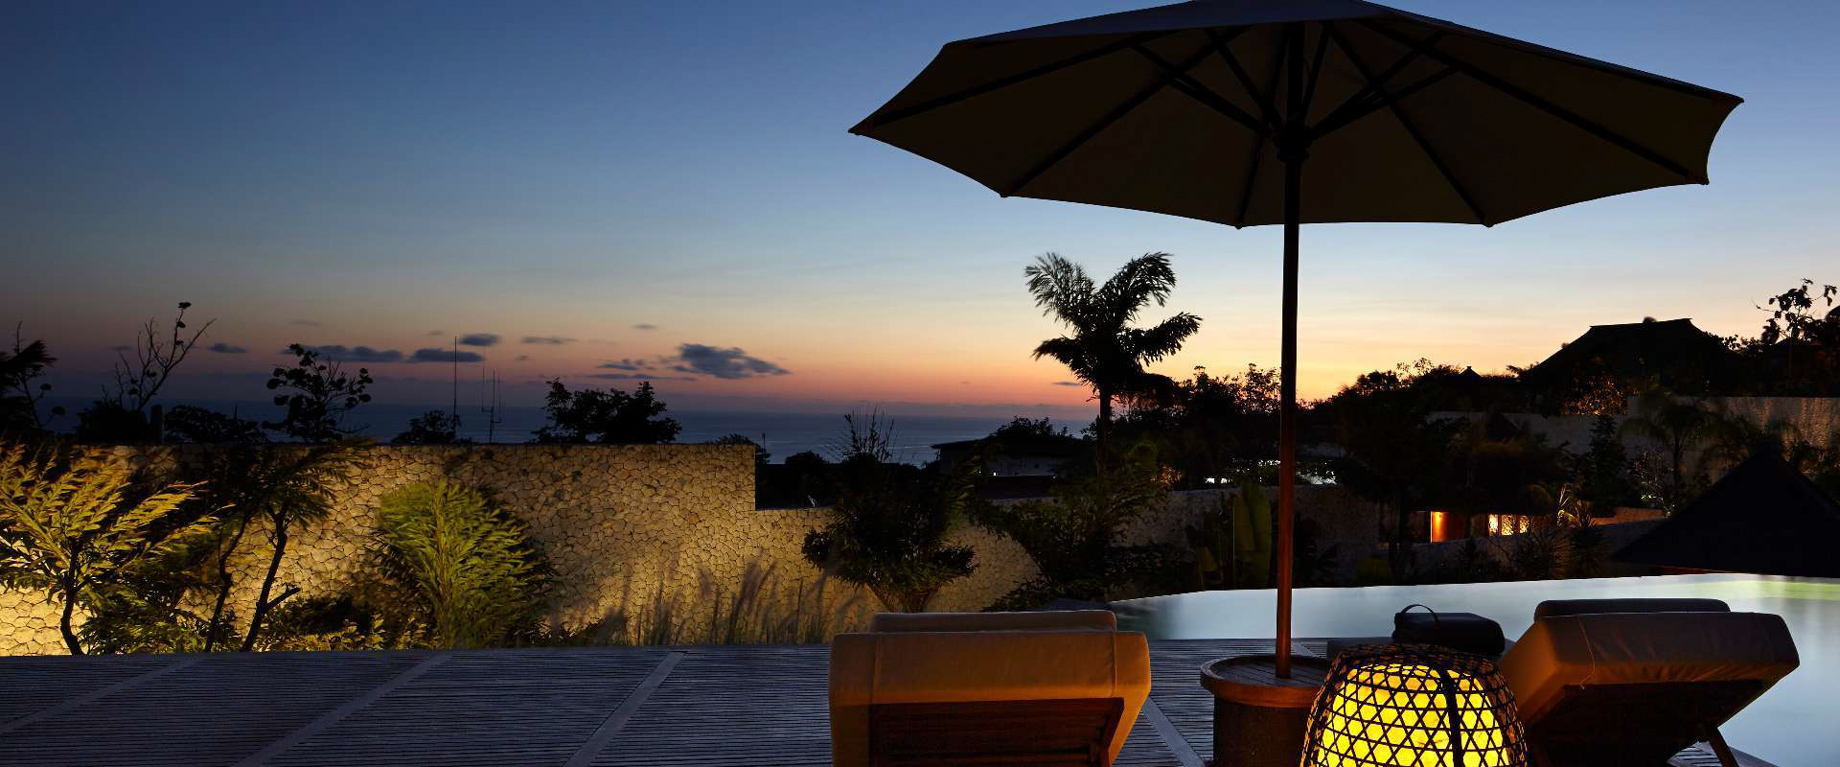 Bvlgari Resort Bali – Uluwatu, Bali, Indonesia – The Mansions Pool Deck Ocean View Night